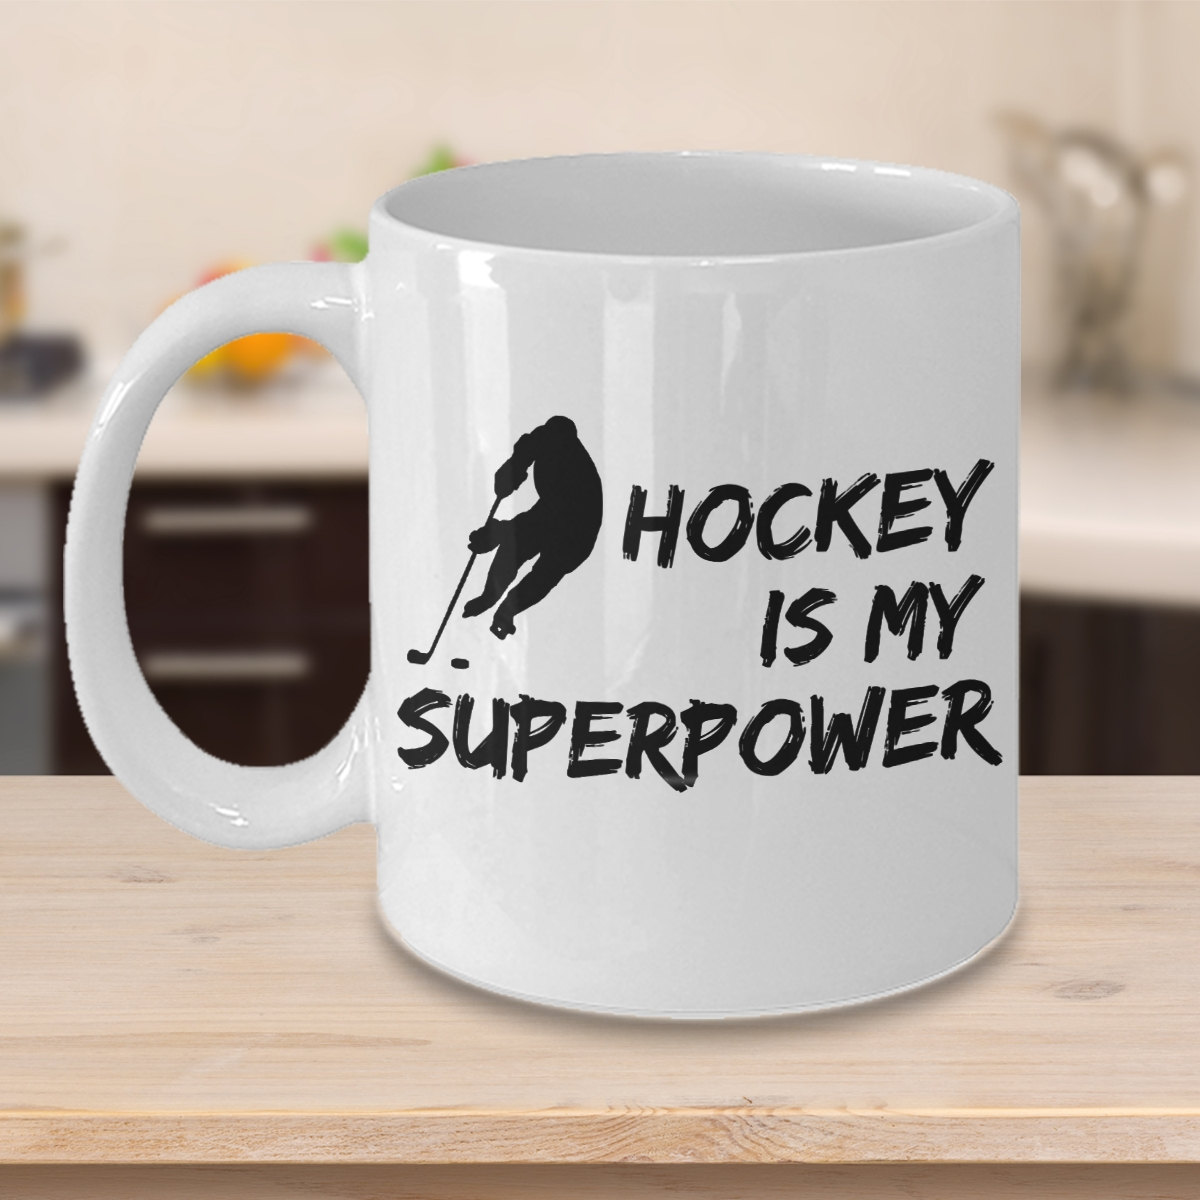 http://trendygearshop.com/wp-content/uploads/2019/12/ice-hockey-mug-this-superpower-mug-is-perfect-fun-hockey-gift-give-our-super-power-mug-to-a-hockey-mom-or-enjoy-hockey-coffee-mug-yourself-2-5e078a63.jpg